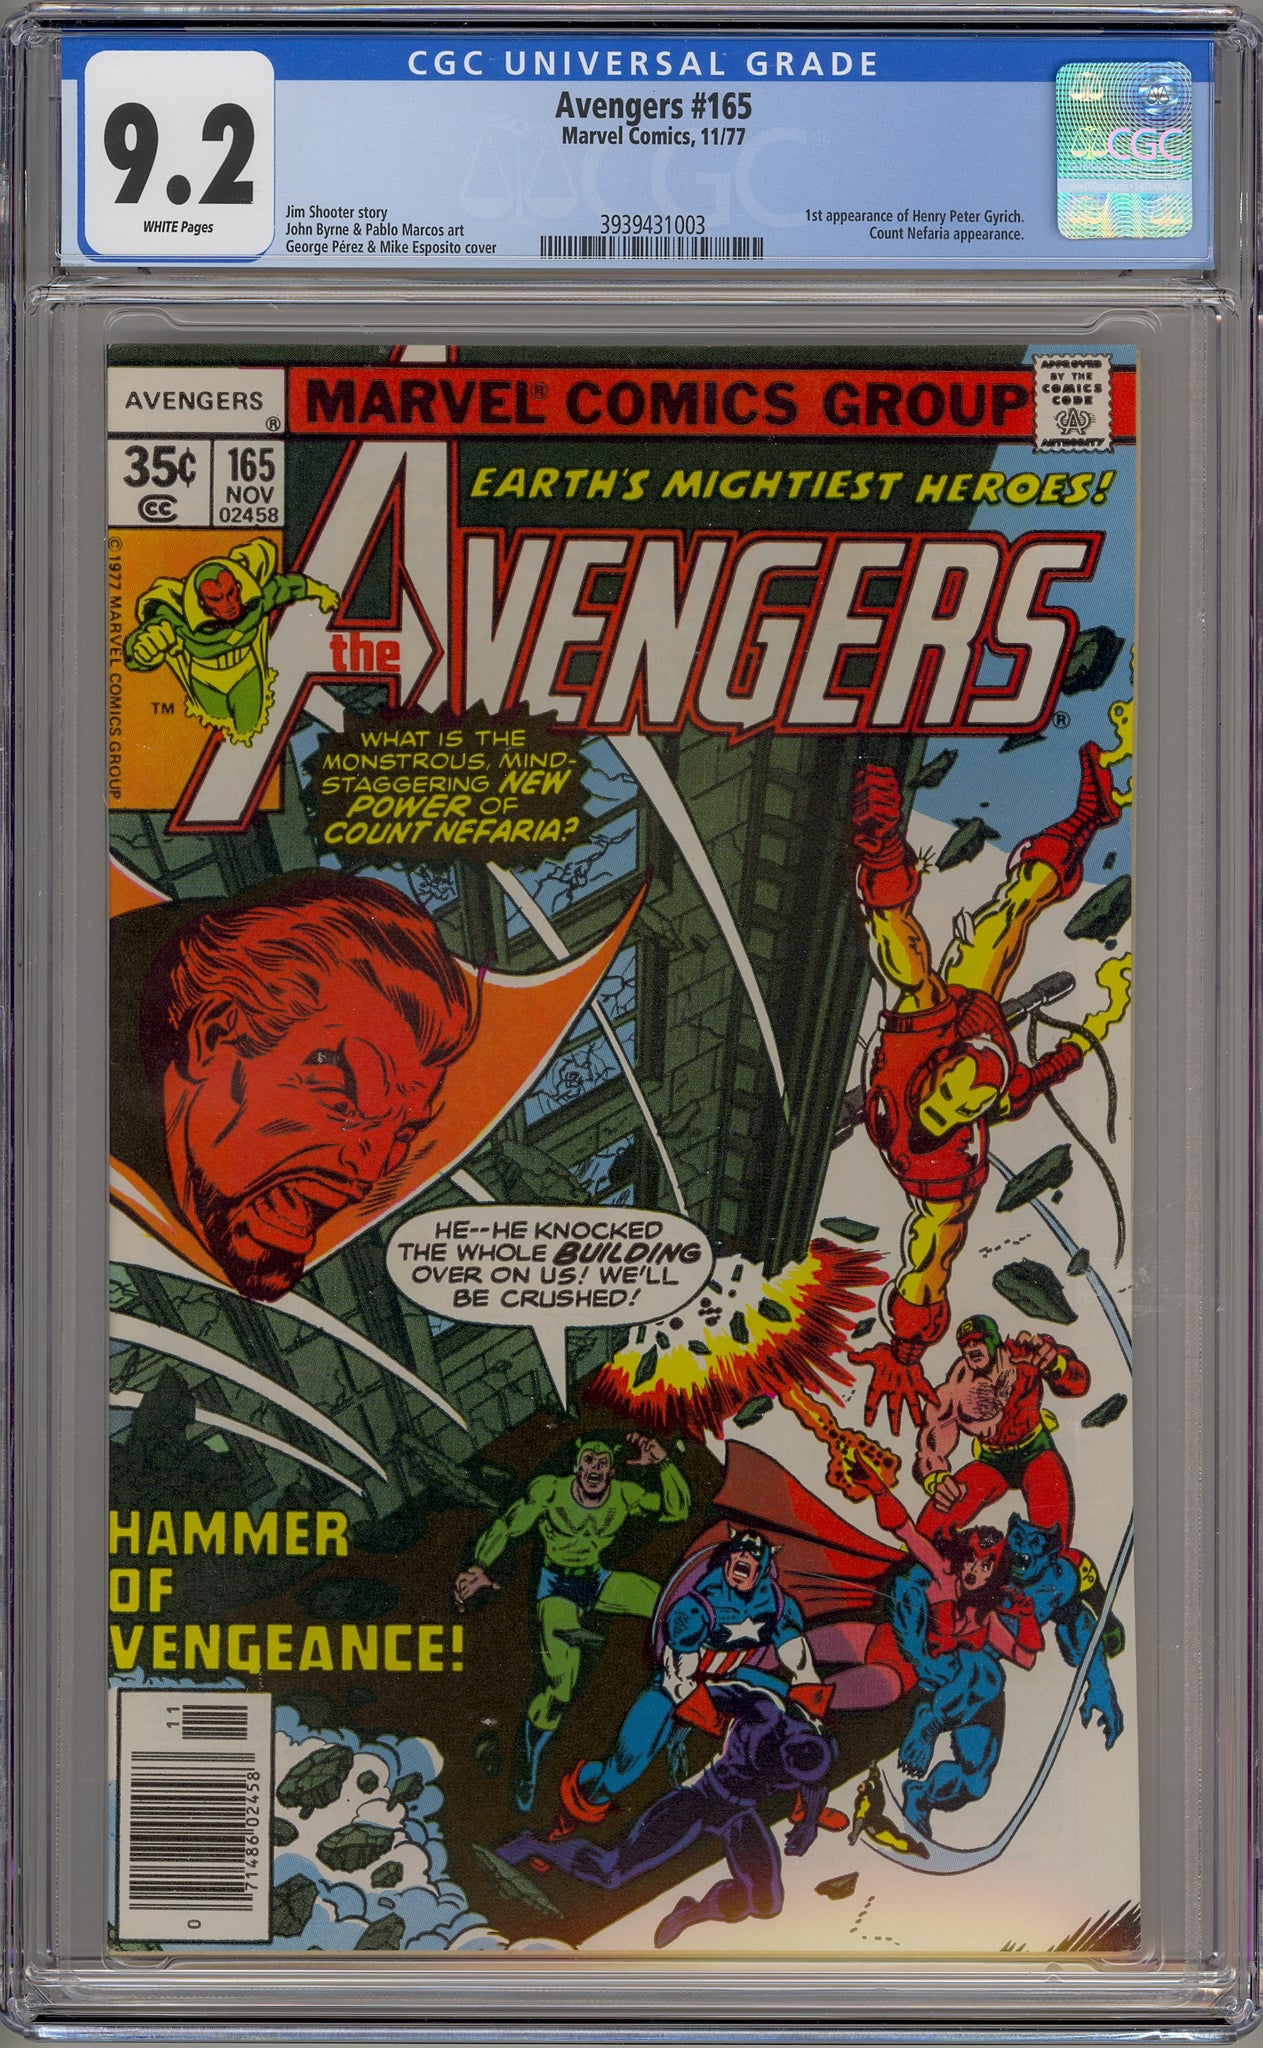 Avengers #165 (1977) Henry Peter Gyrich, Count Nefaria